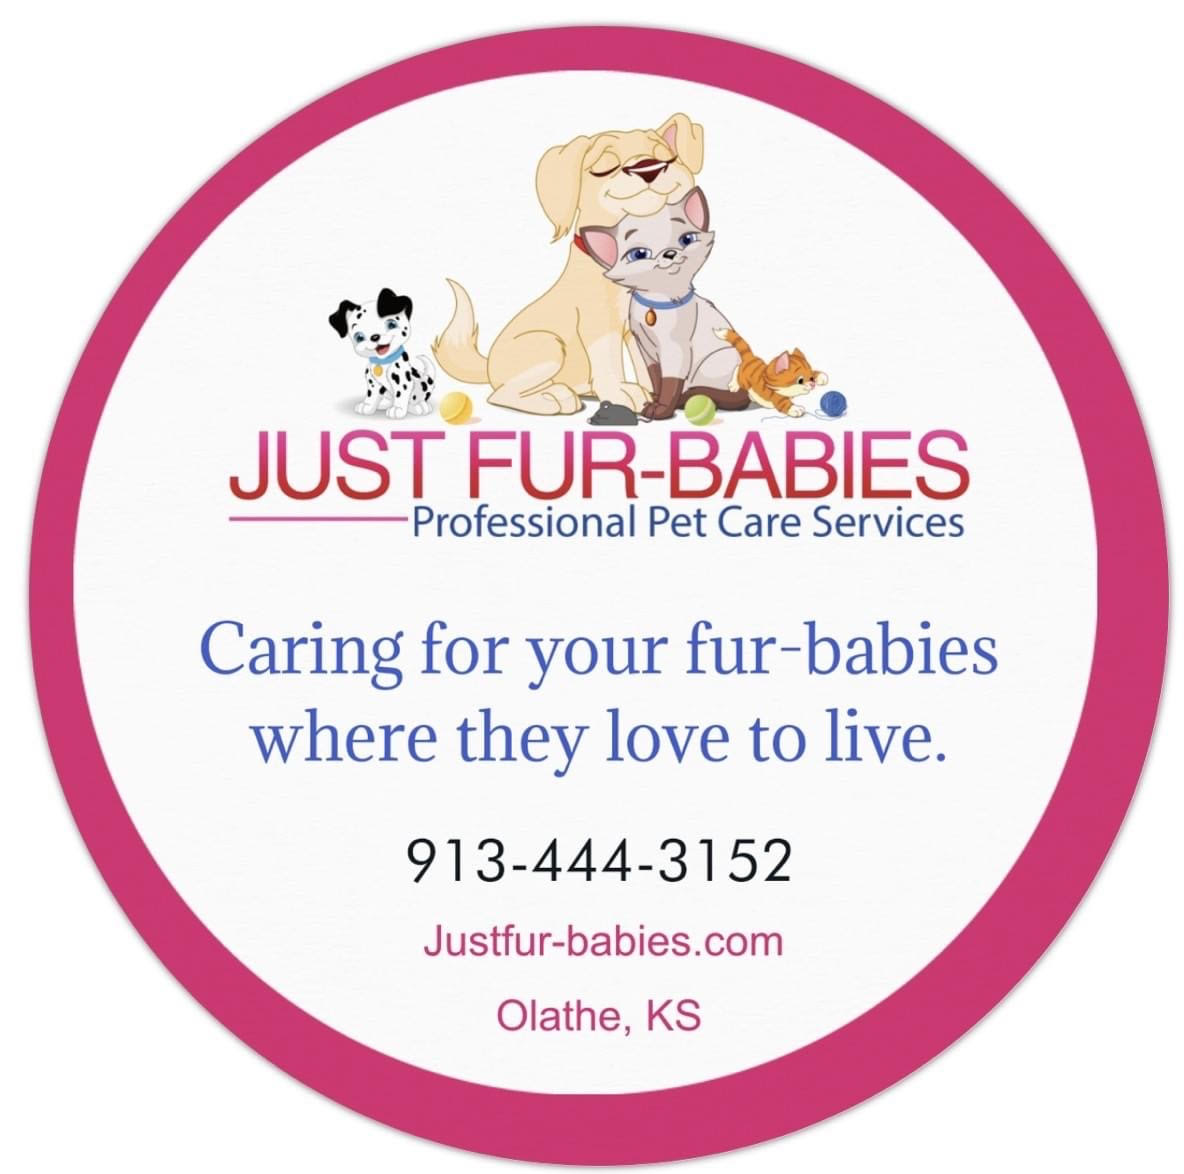 Just Fur-Babies Professional Pet Care Services